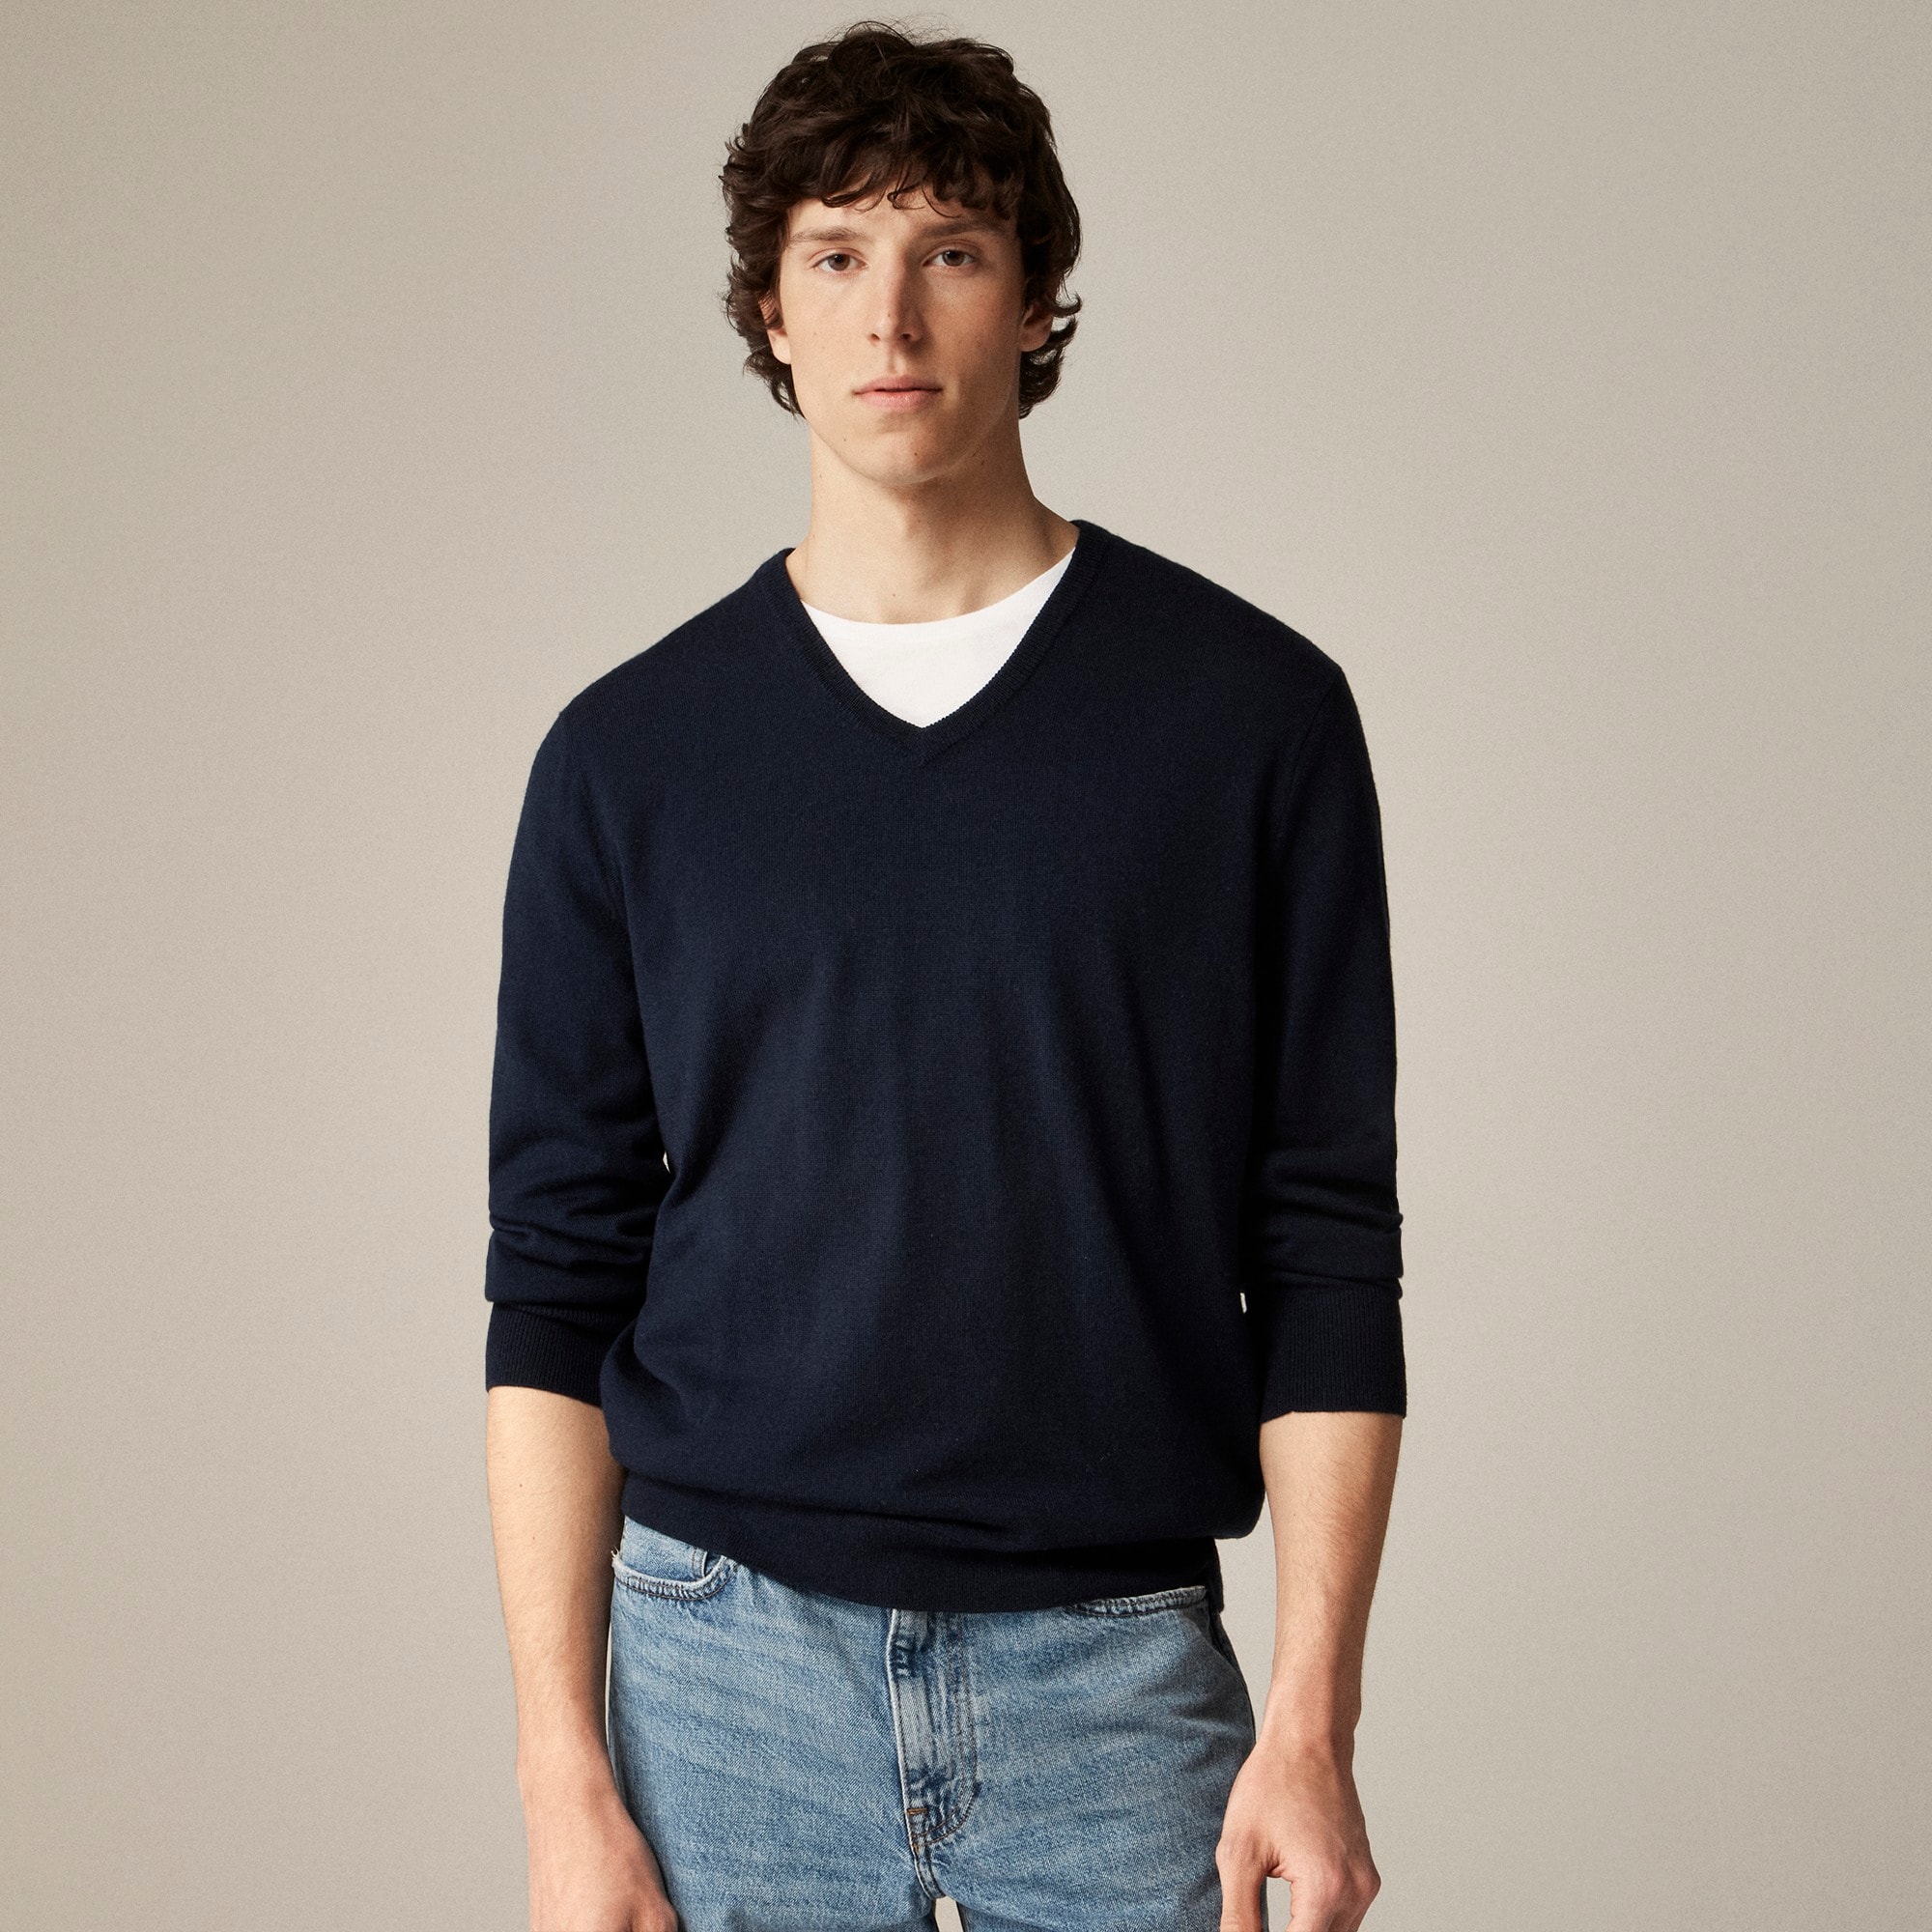 Jcrew Merino wool V-neck sweater